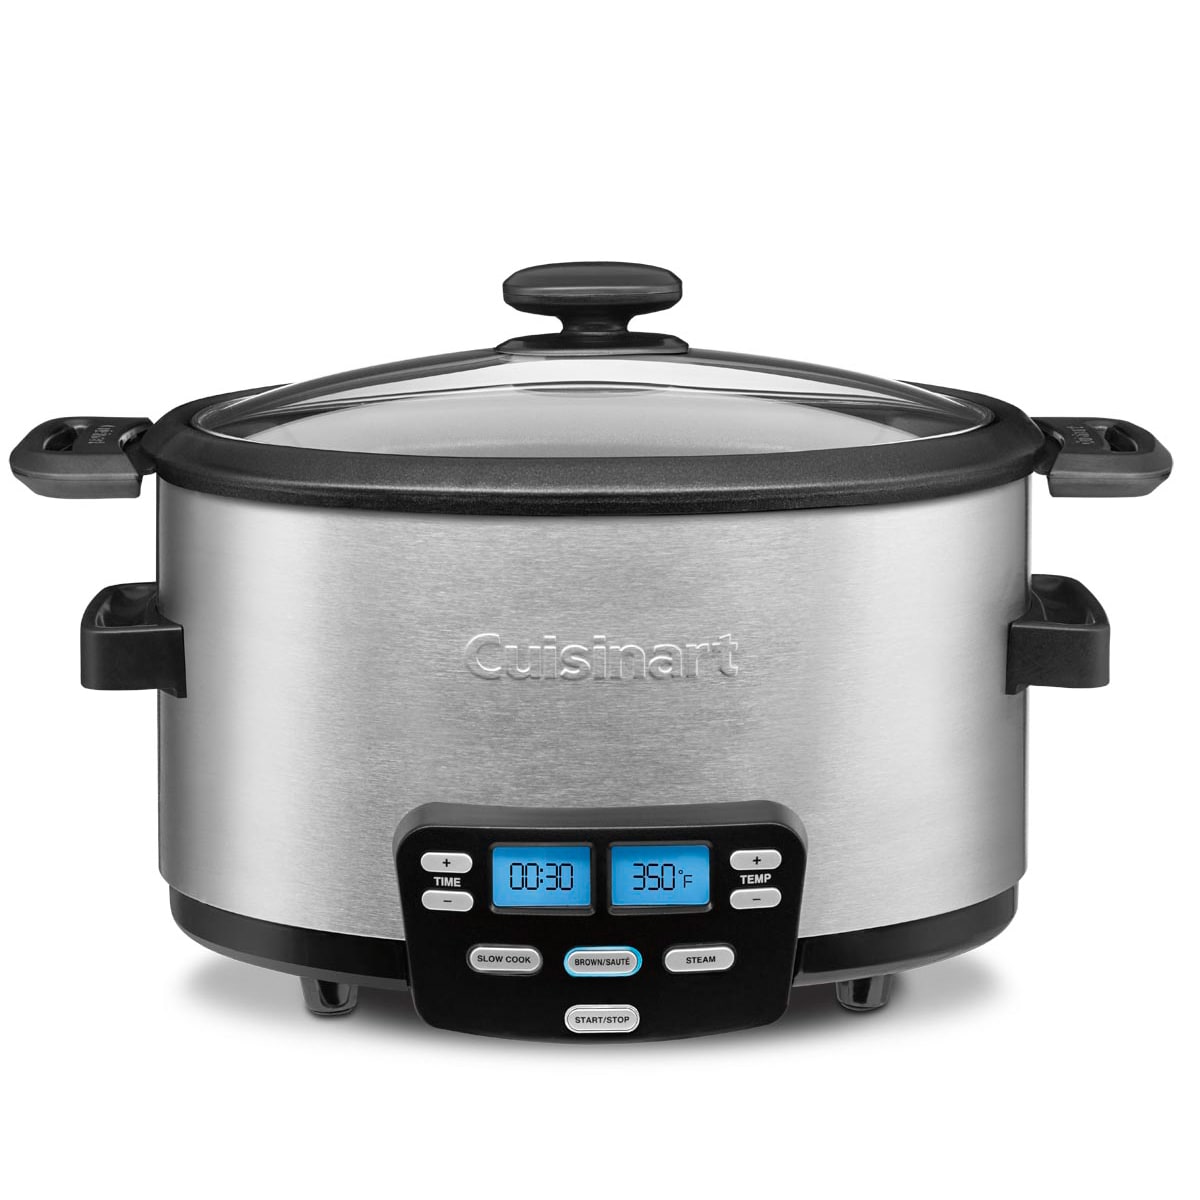 https://ak1.ostkcdn.com/images/products/7678609/7678609/Cuisinart-MSC-400-4-quart-Cook-Central-Multi-cooker-L15088809.jpg